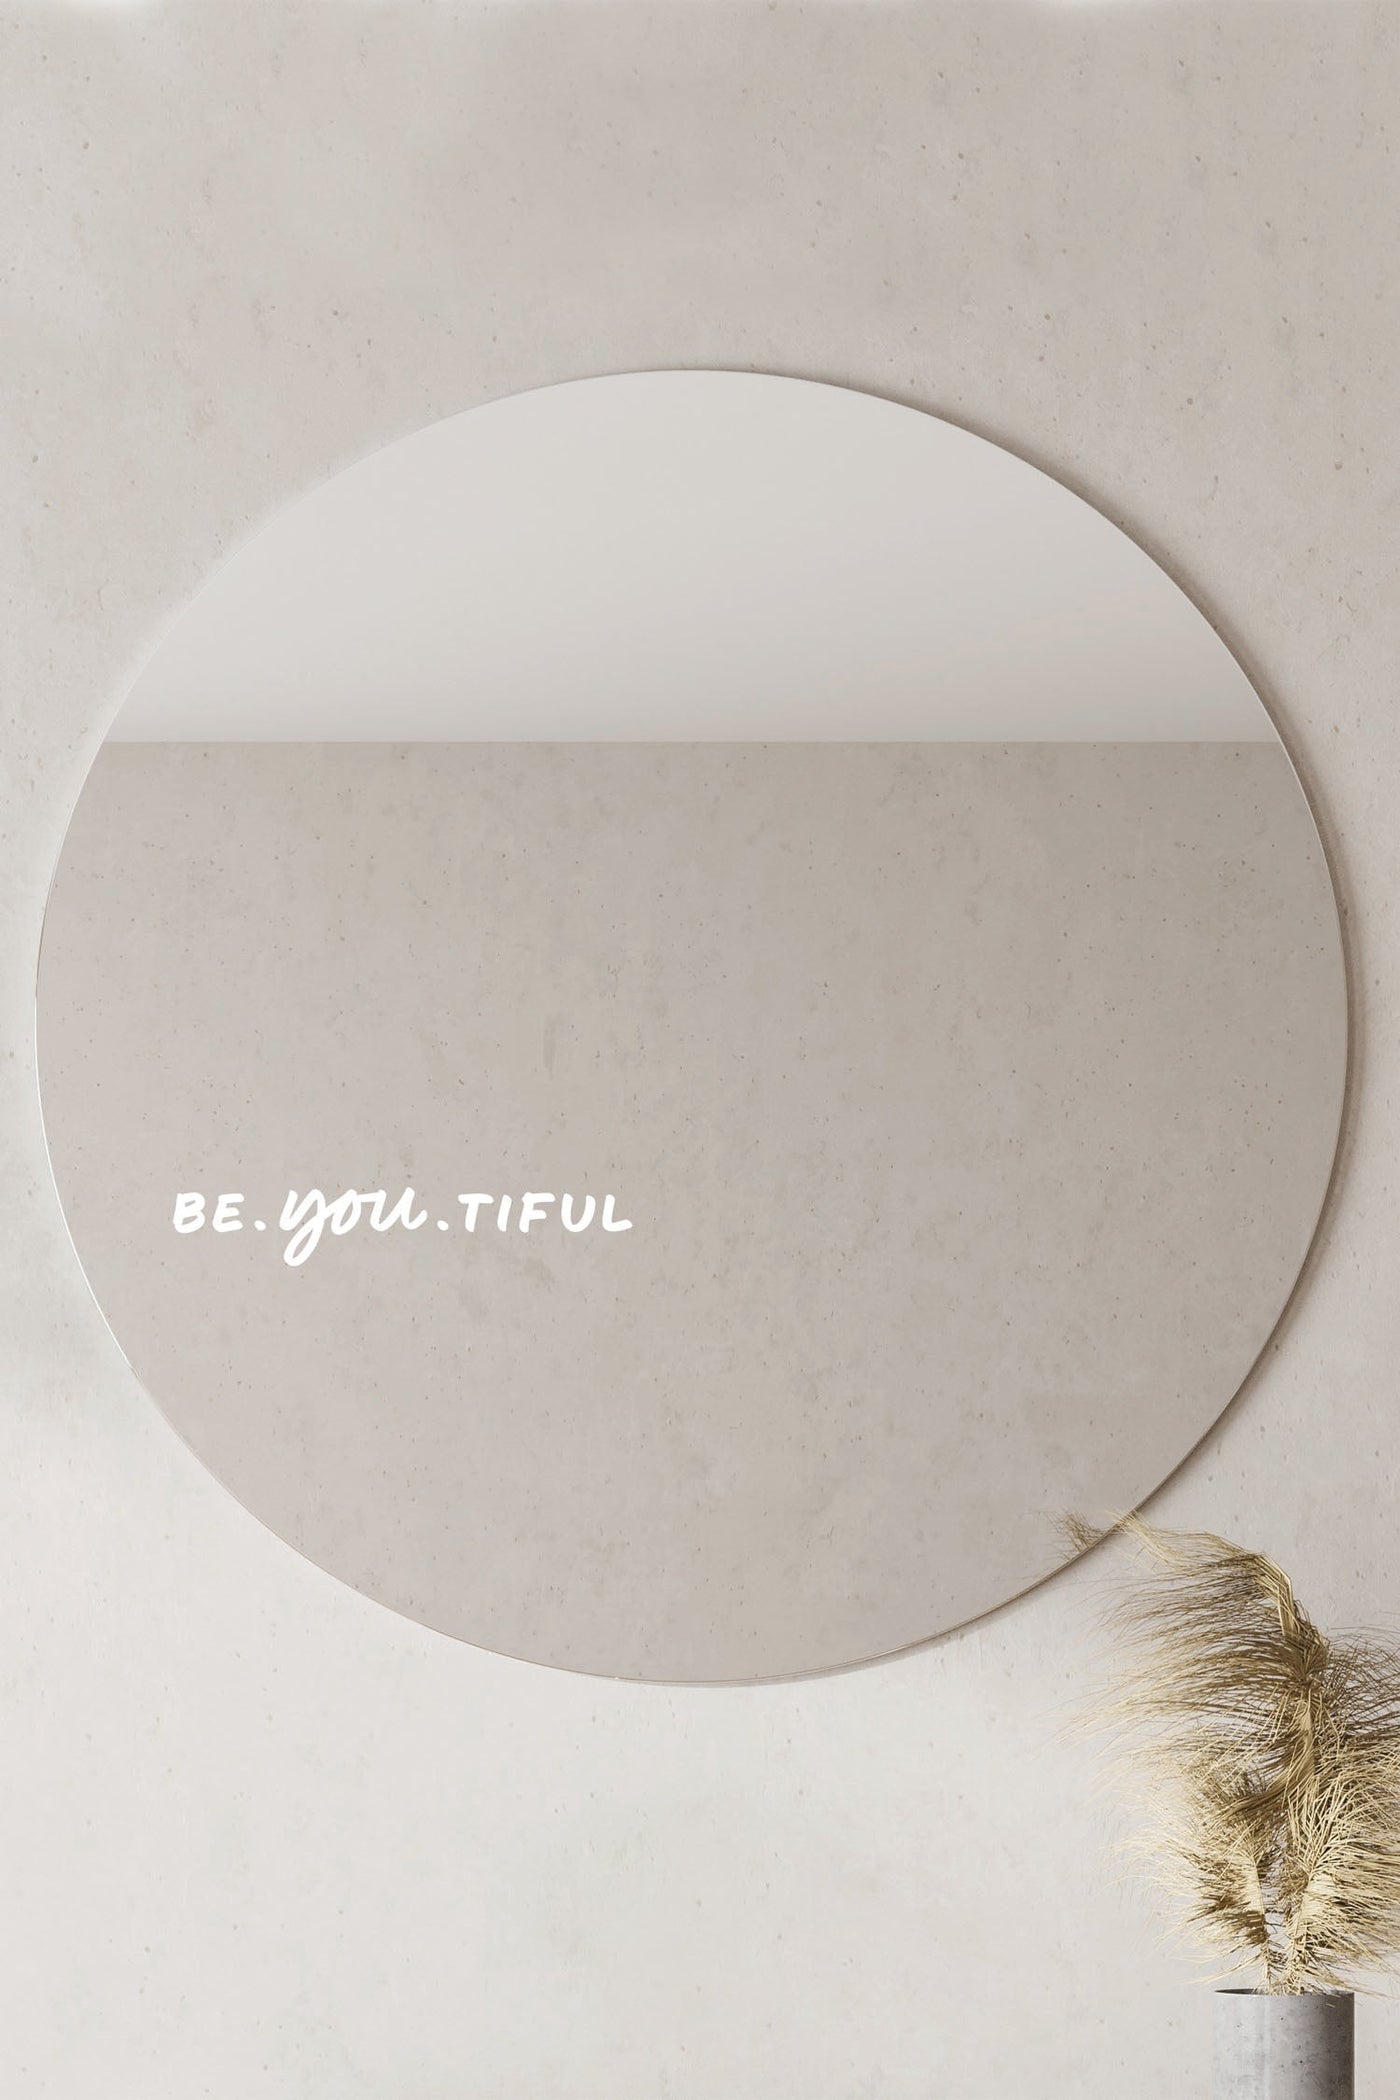 BE.YOU.TIFUL. - Affirmation Mirror Sticker Affirmation Stickers Selfawear 